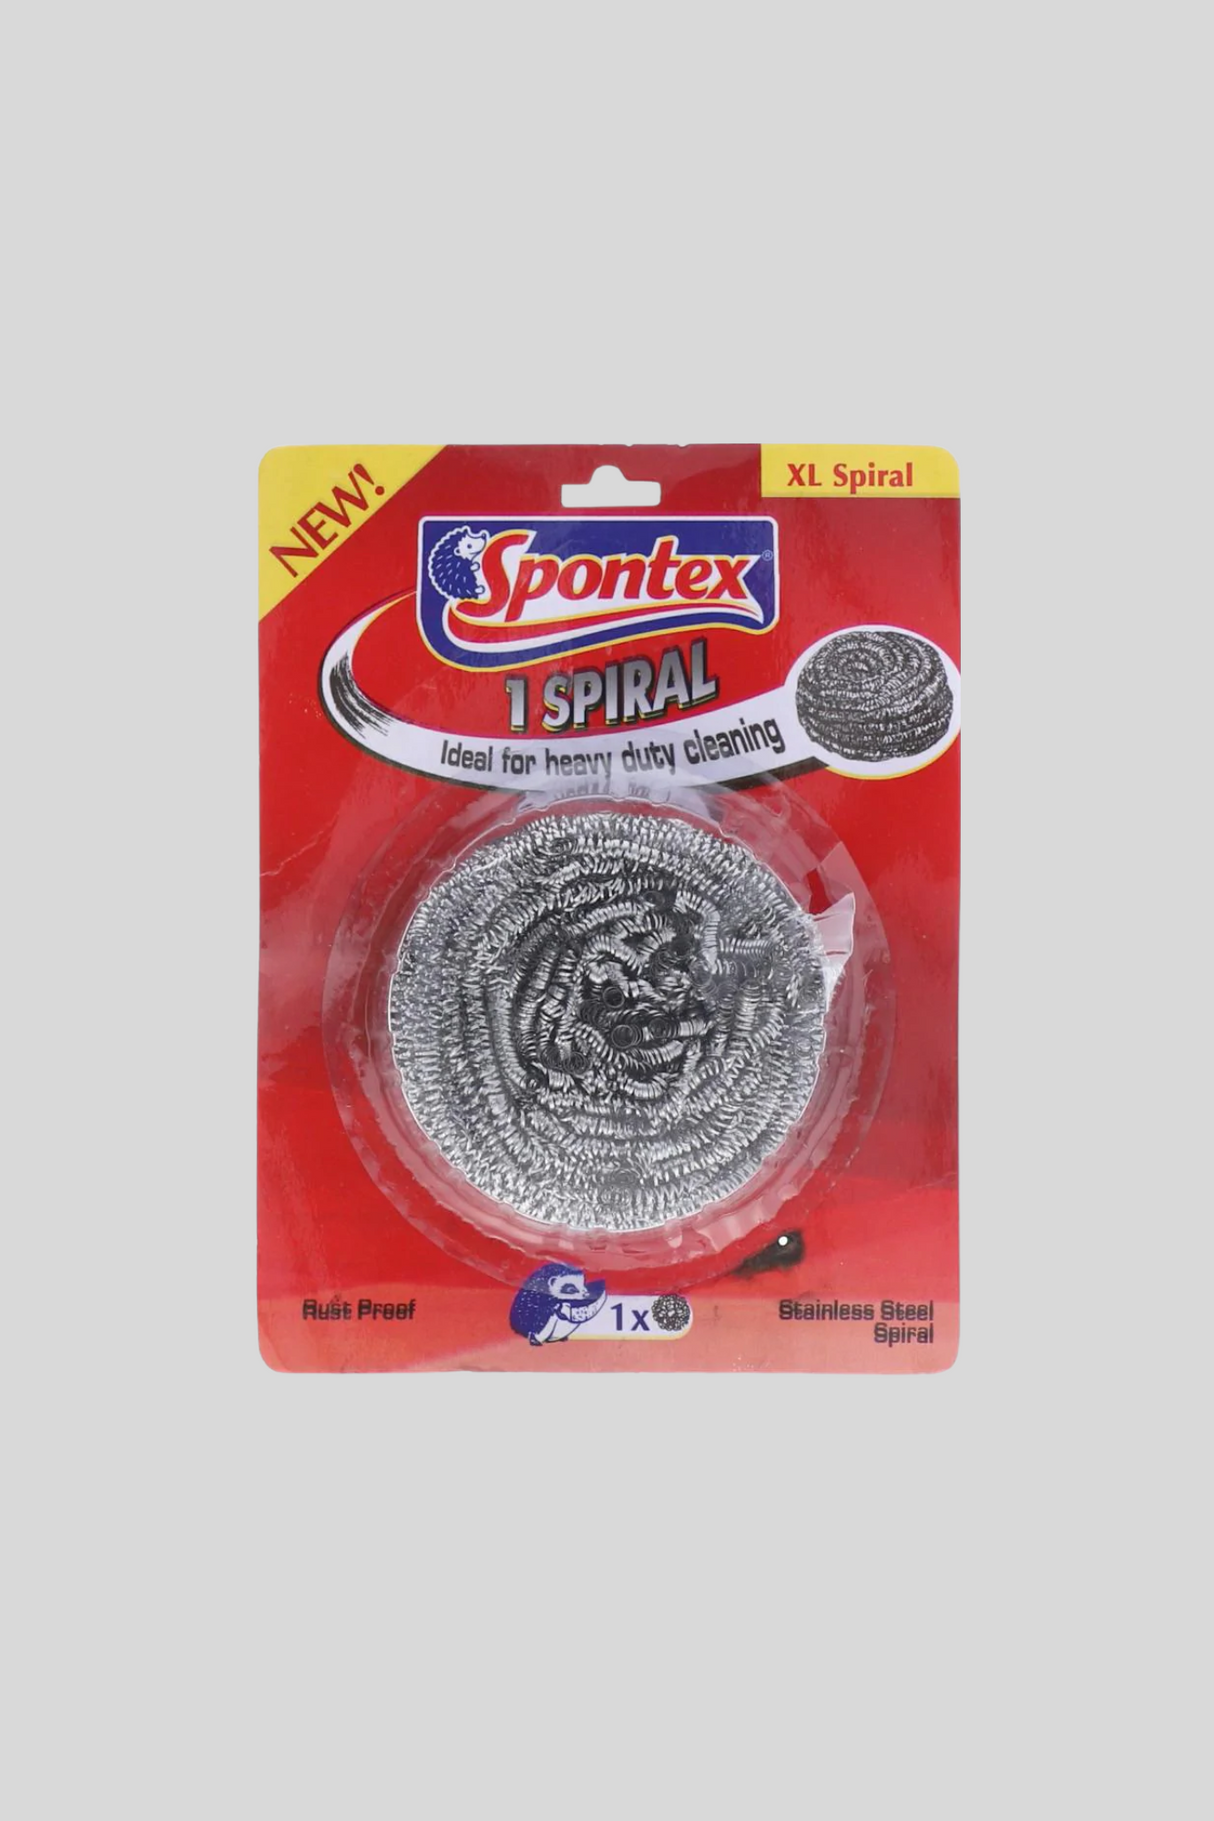 spontex spiral xl